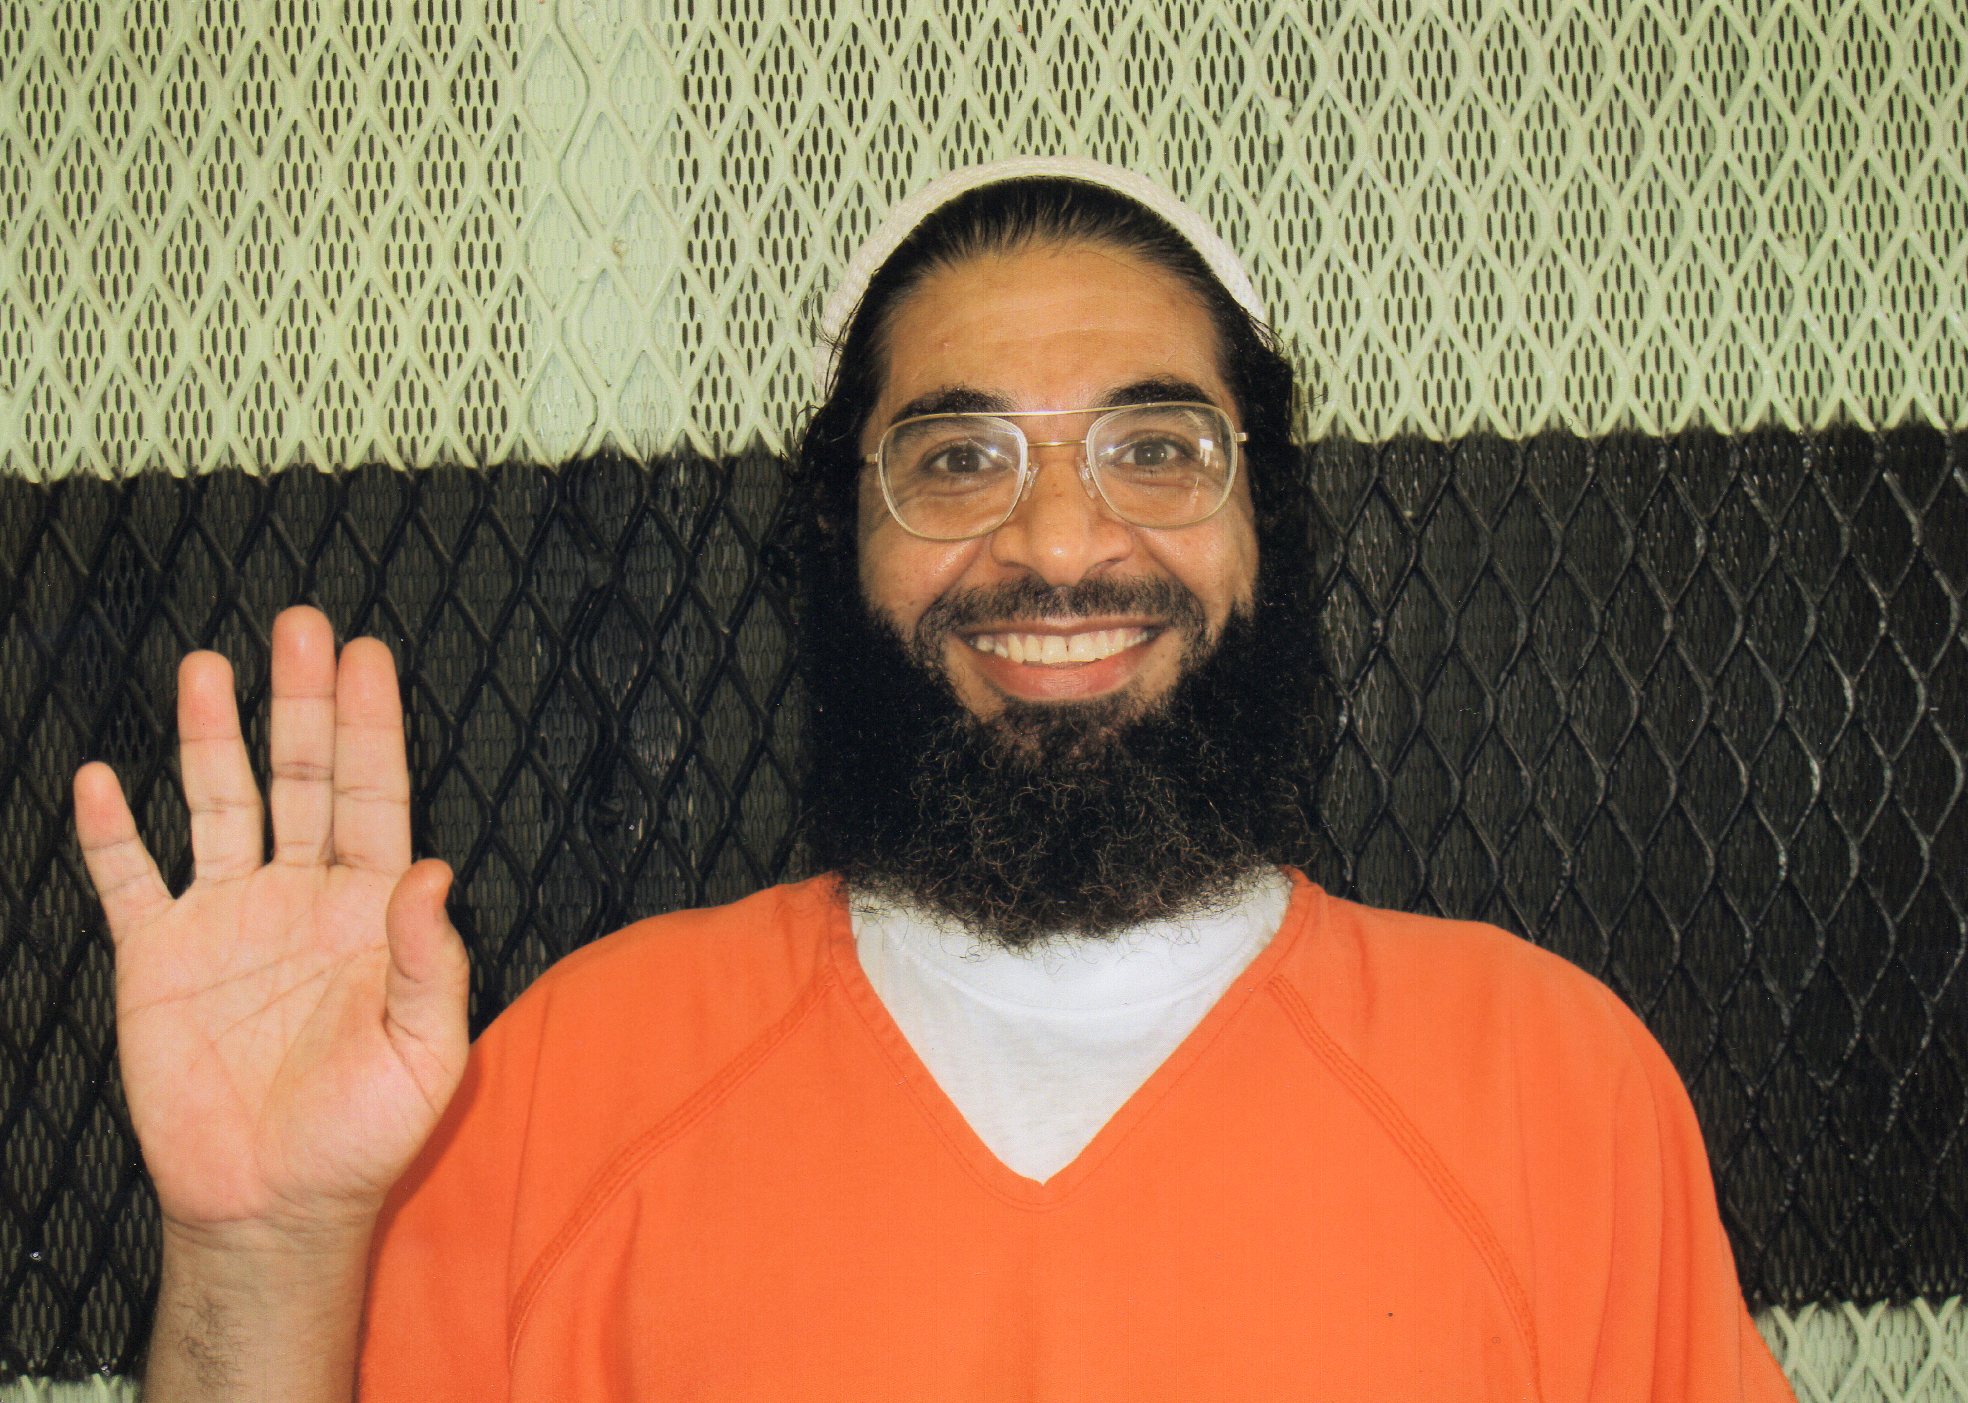 Controversial Detainee Freed From Guantanamo Bay Washington Examiner 